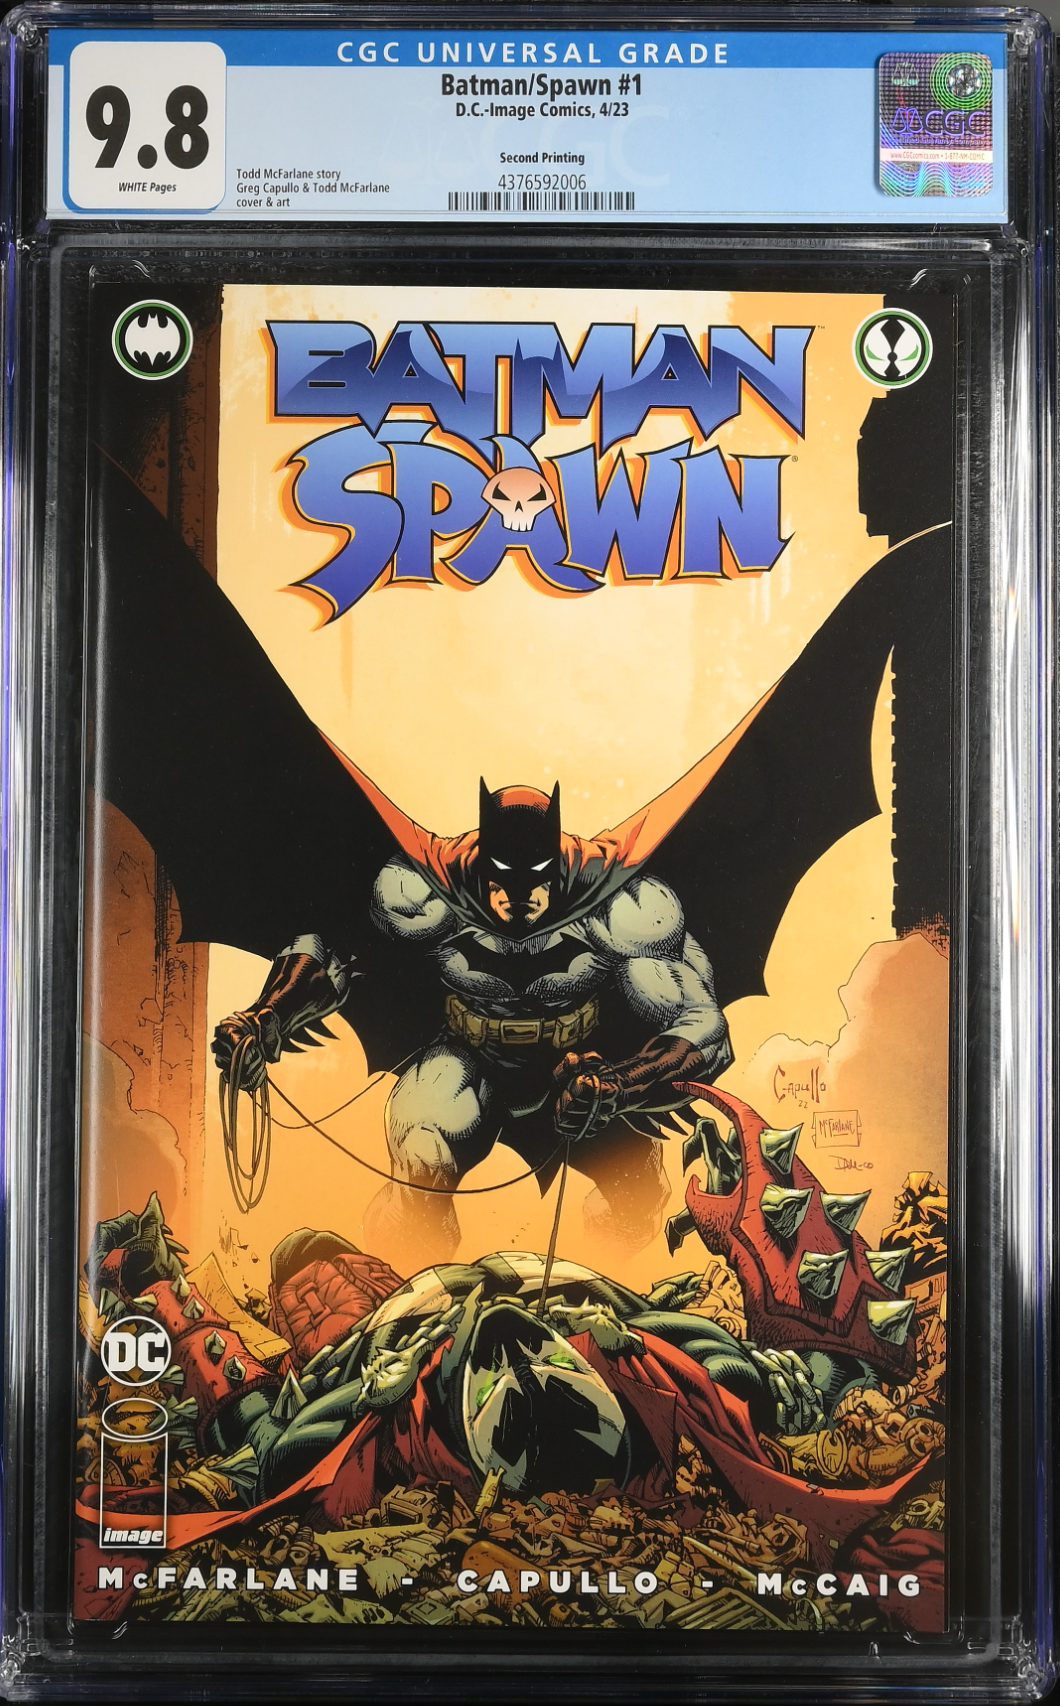 Batman Spawn #1 Second Printing CGC 9.8